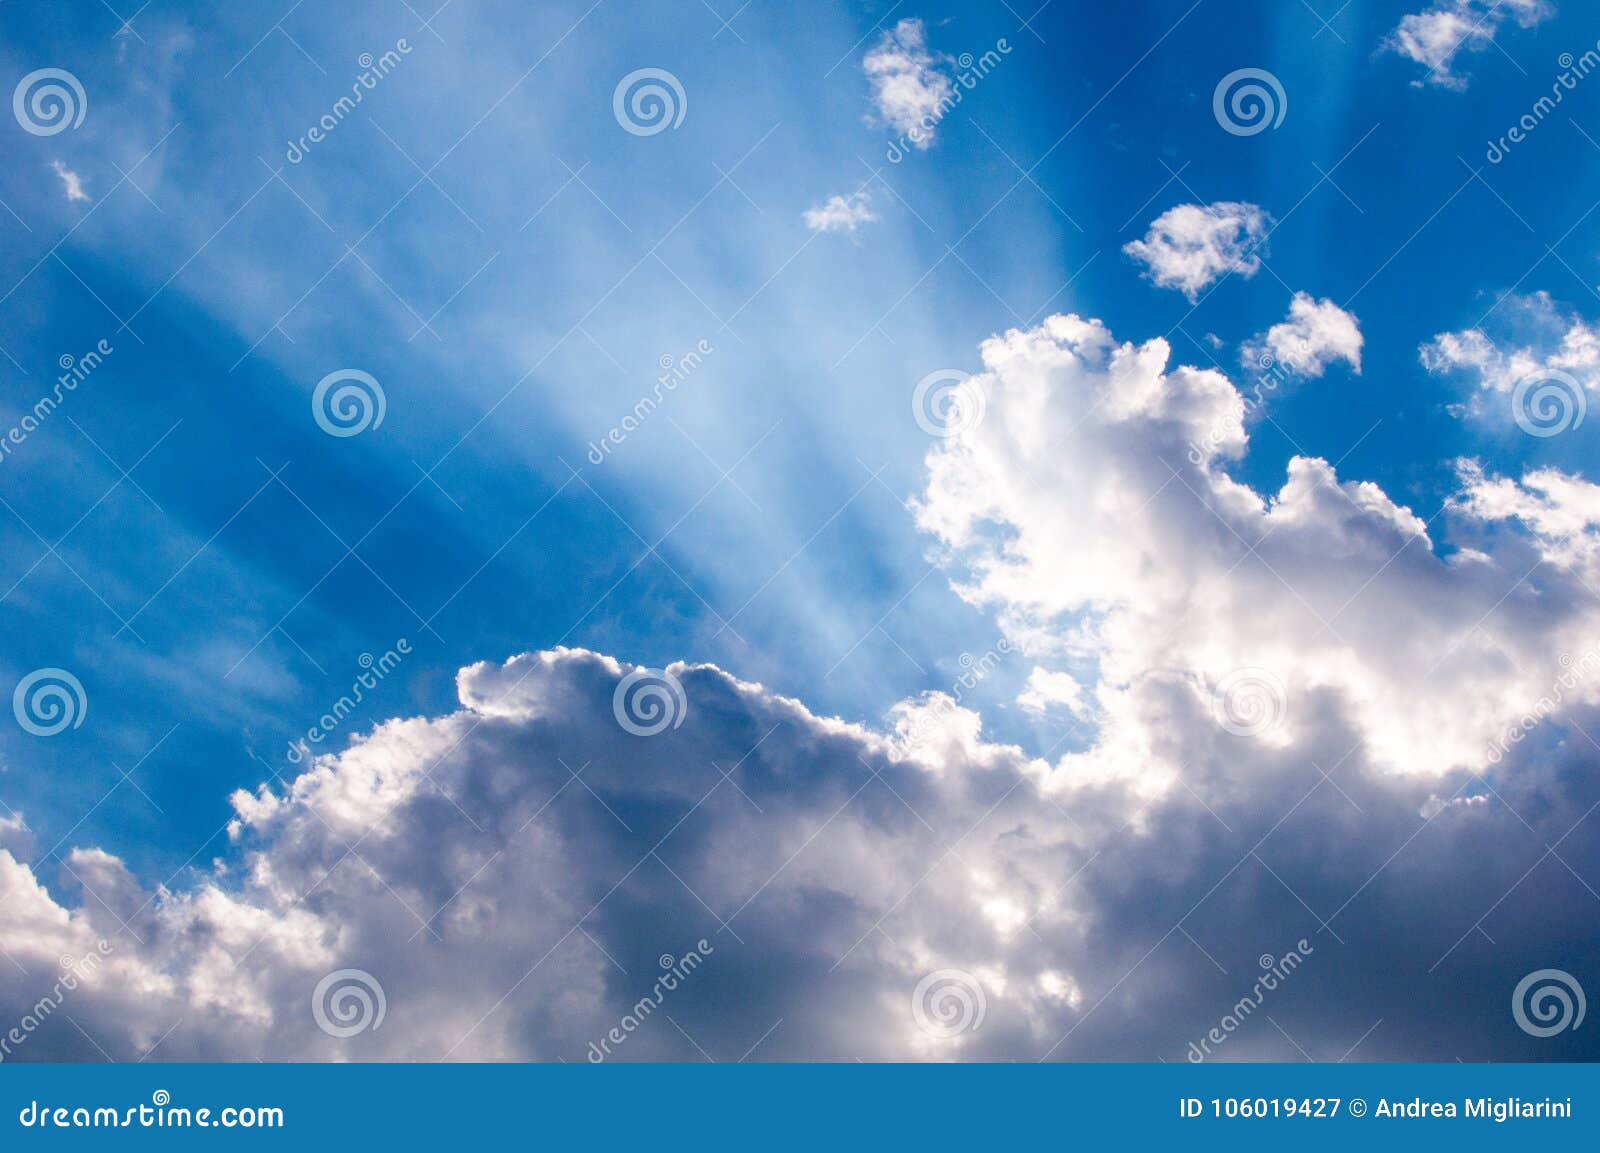 heavenly sunrays through clouds, wallpaper for desktop